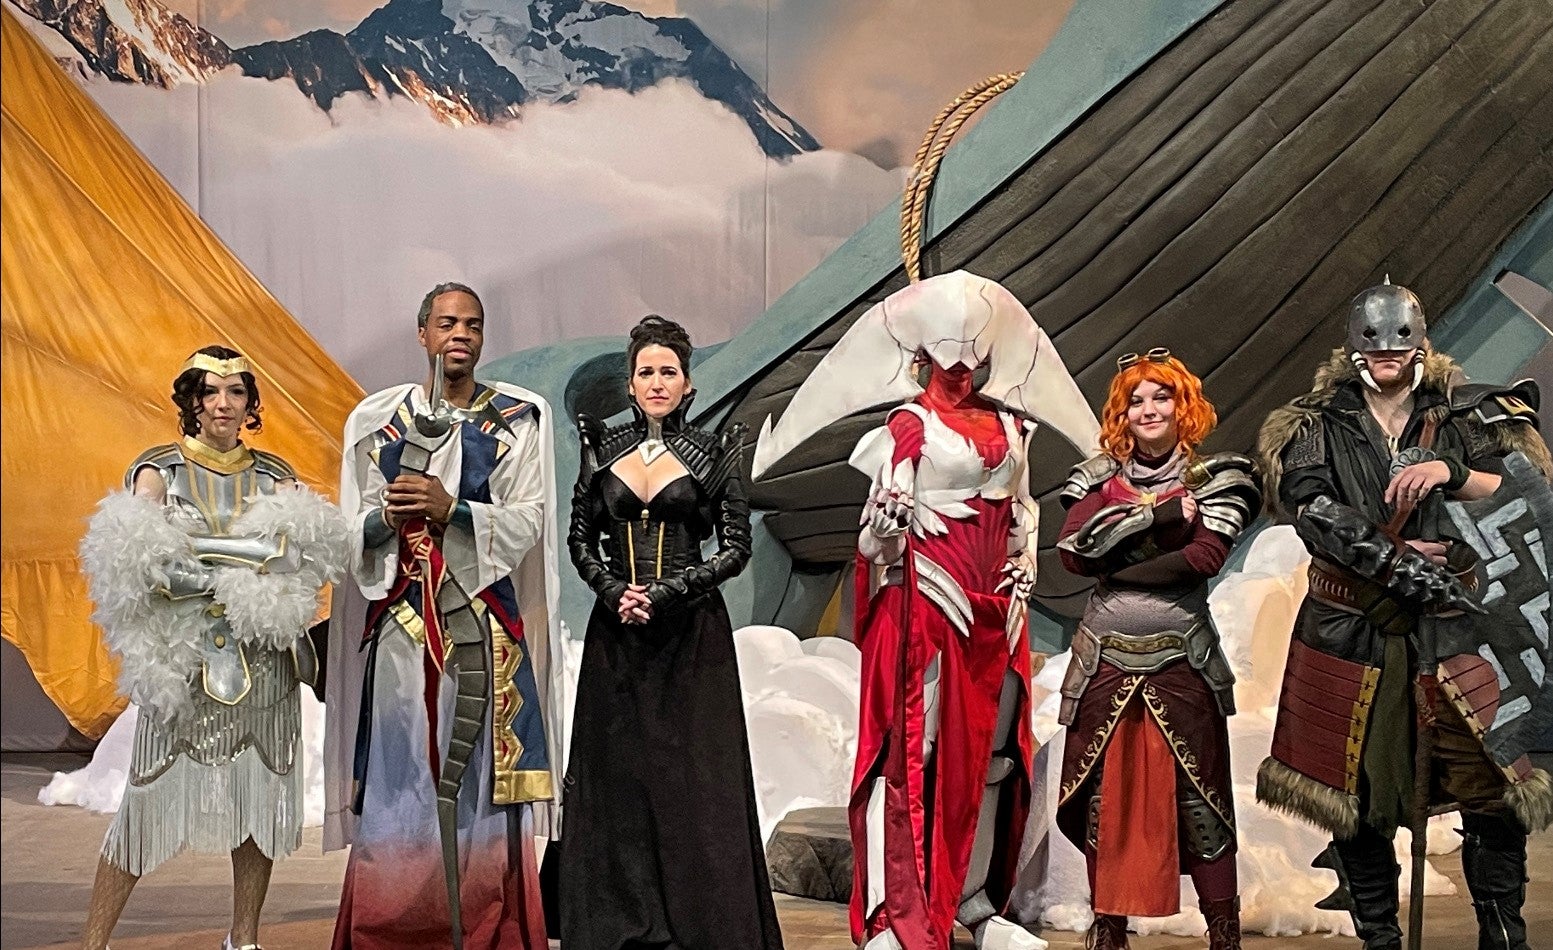 PHOTOS Costumes at Wizard World Philadelphia Comic Con  6abc Philadelphia